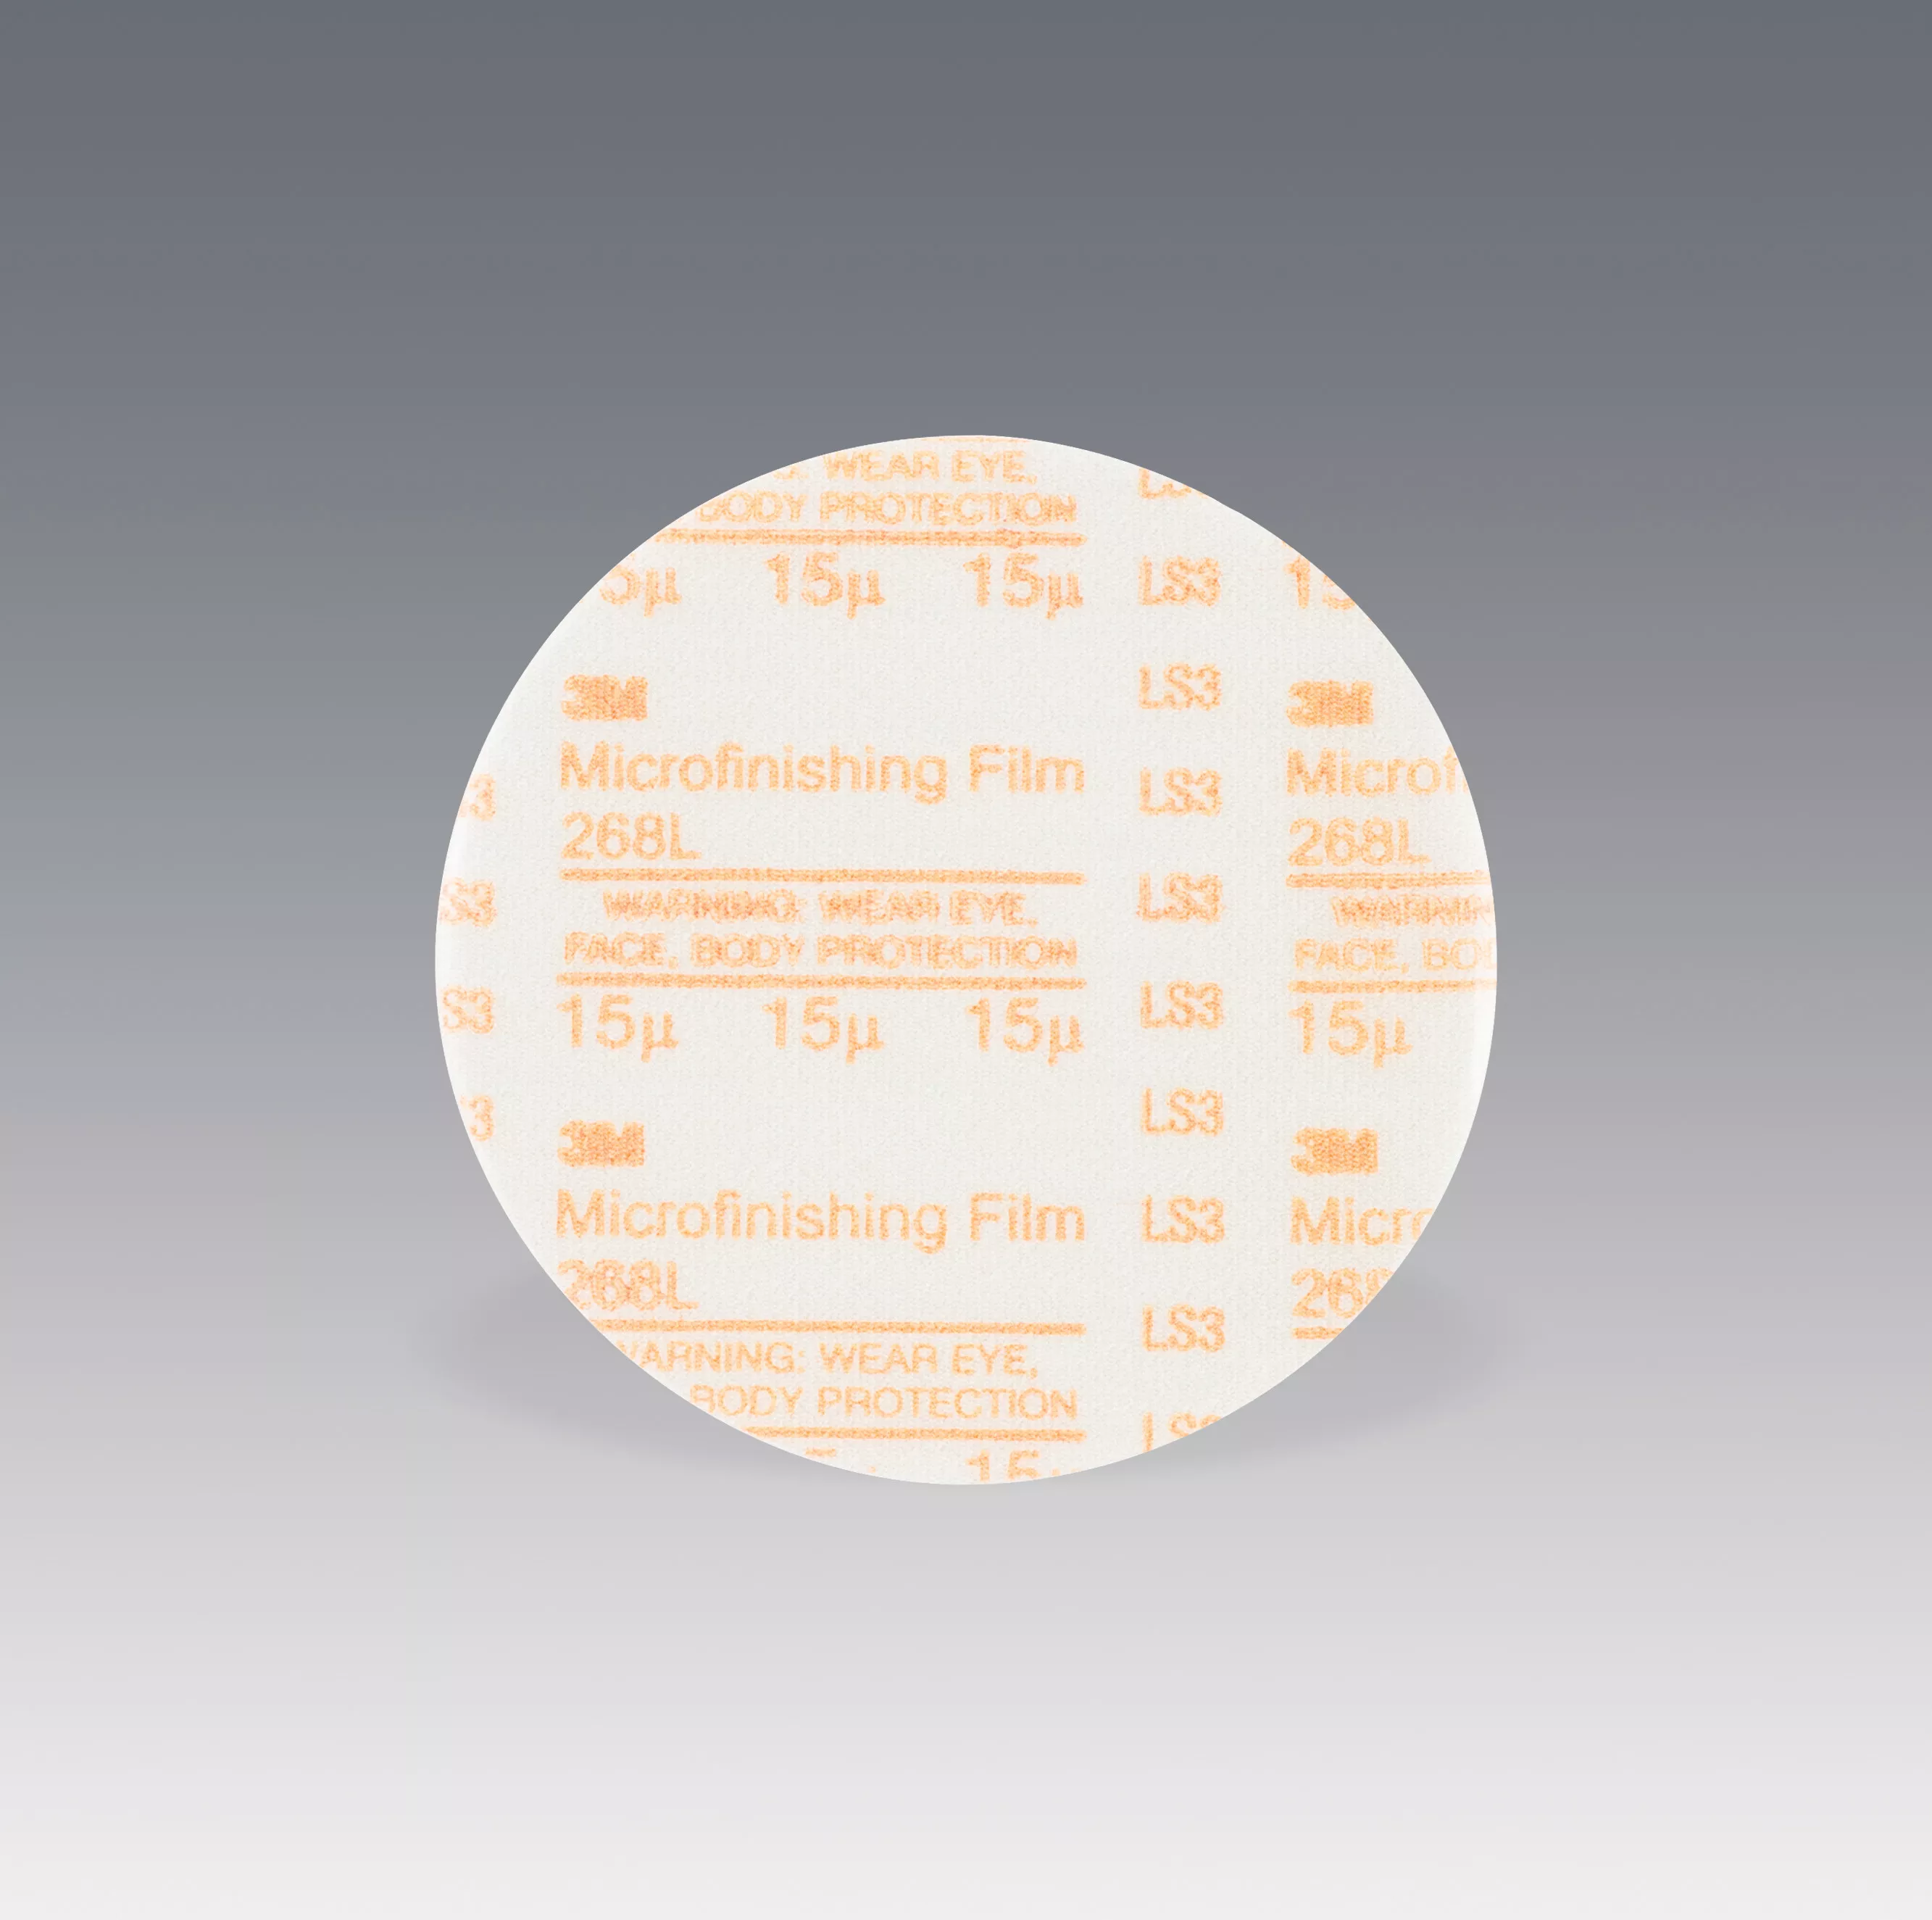 SKU 7000044725 | 3M™ Microfinishing PSA Film Disc 268L